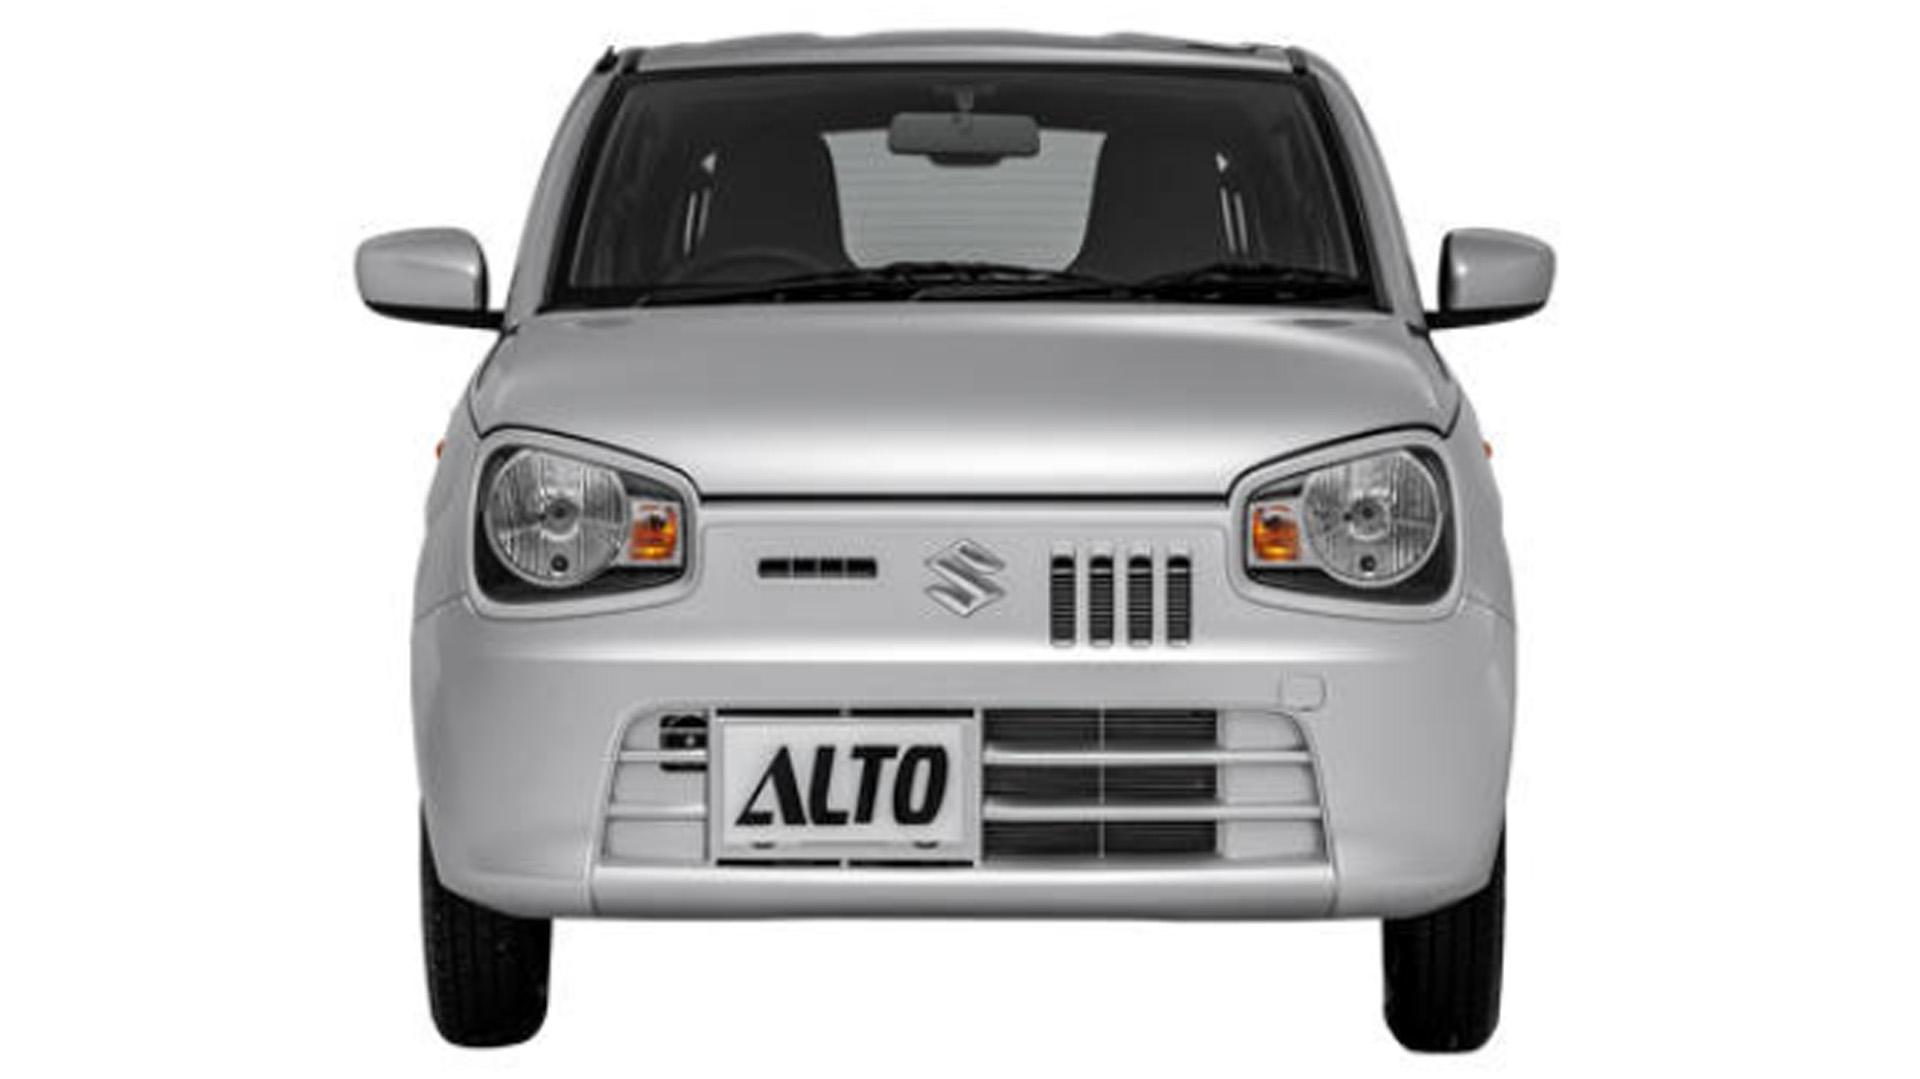 Suzuki Alto Pakistan 2022 Review Price and Features